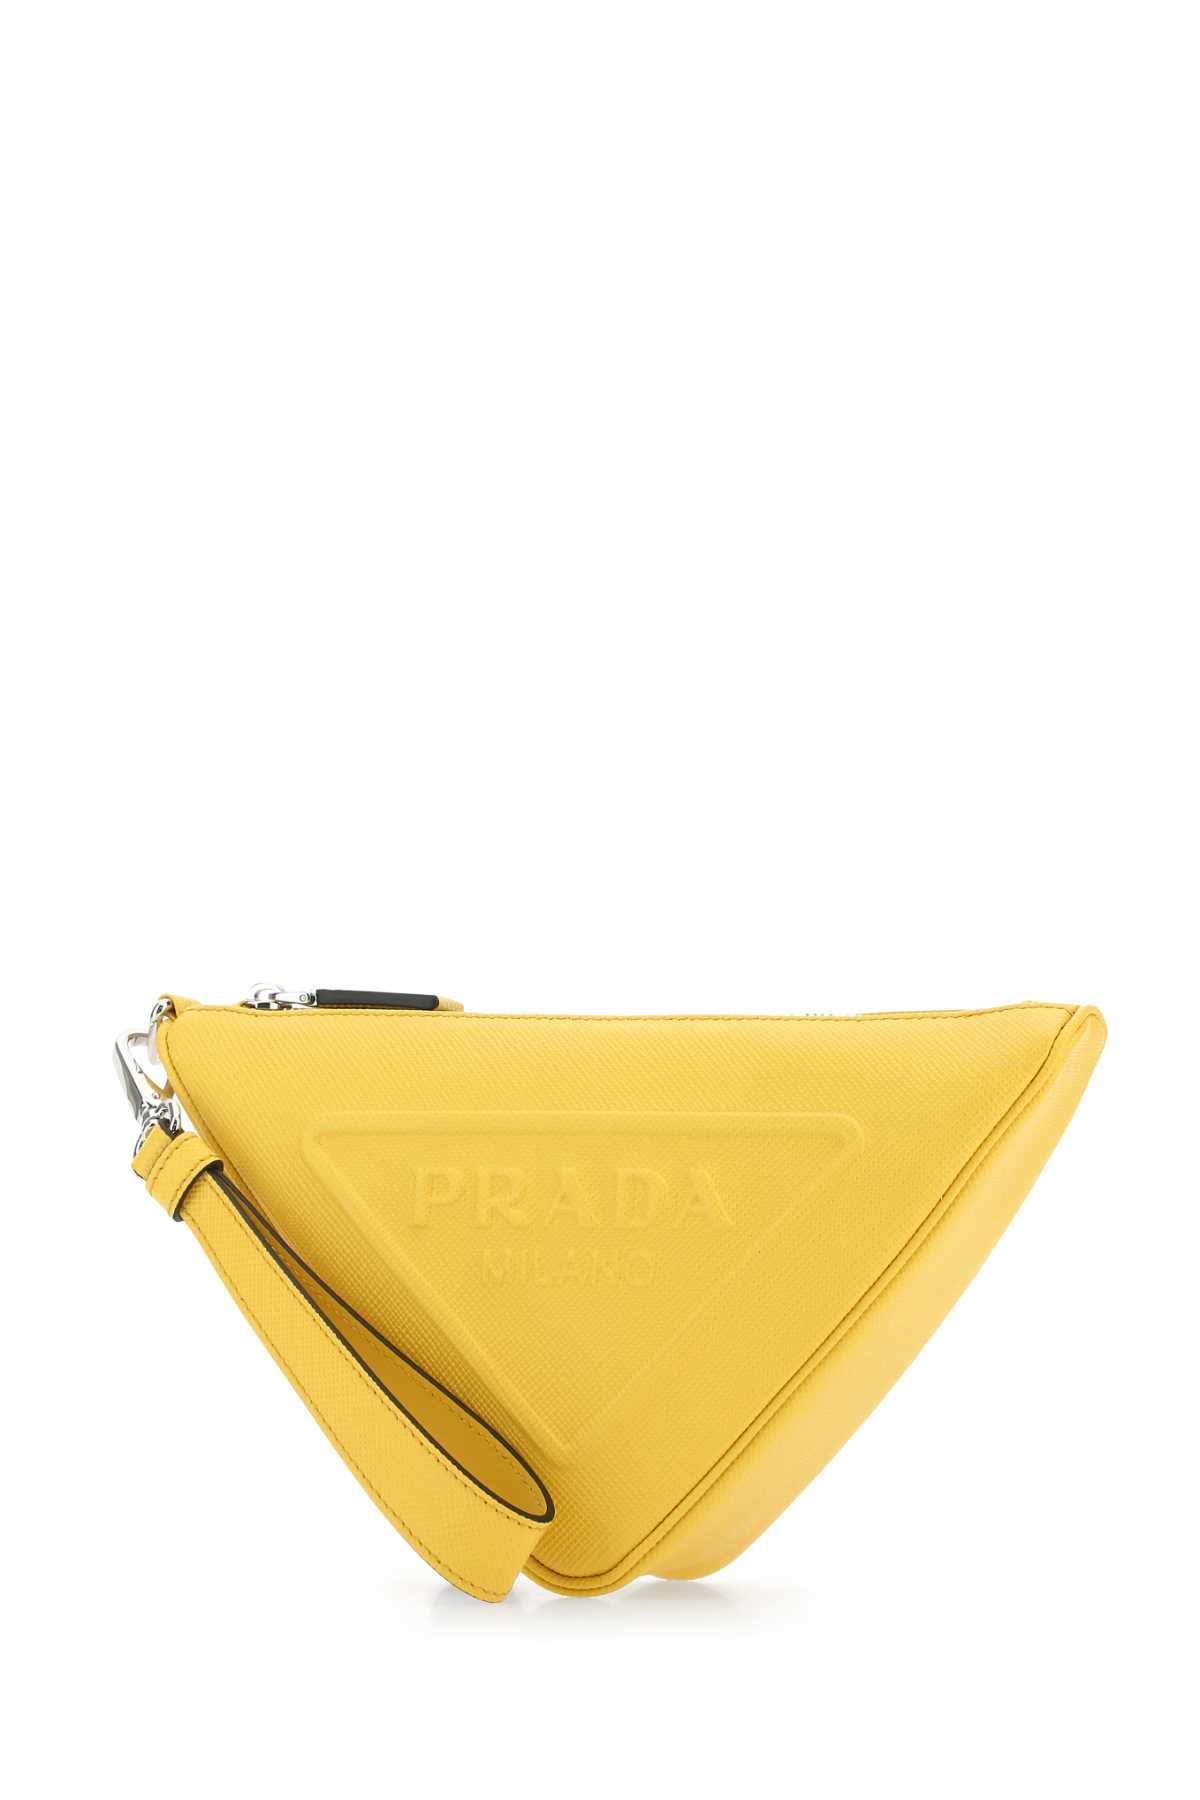 Shop Prada Yellow Leather Triangle Clutch In F0377